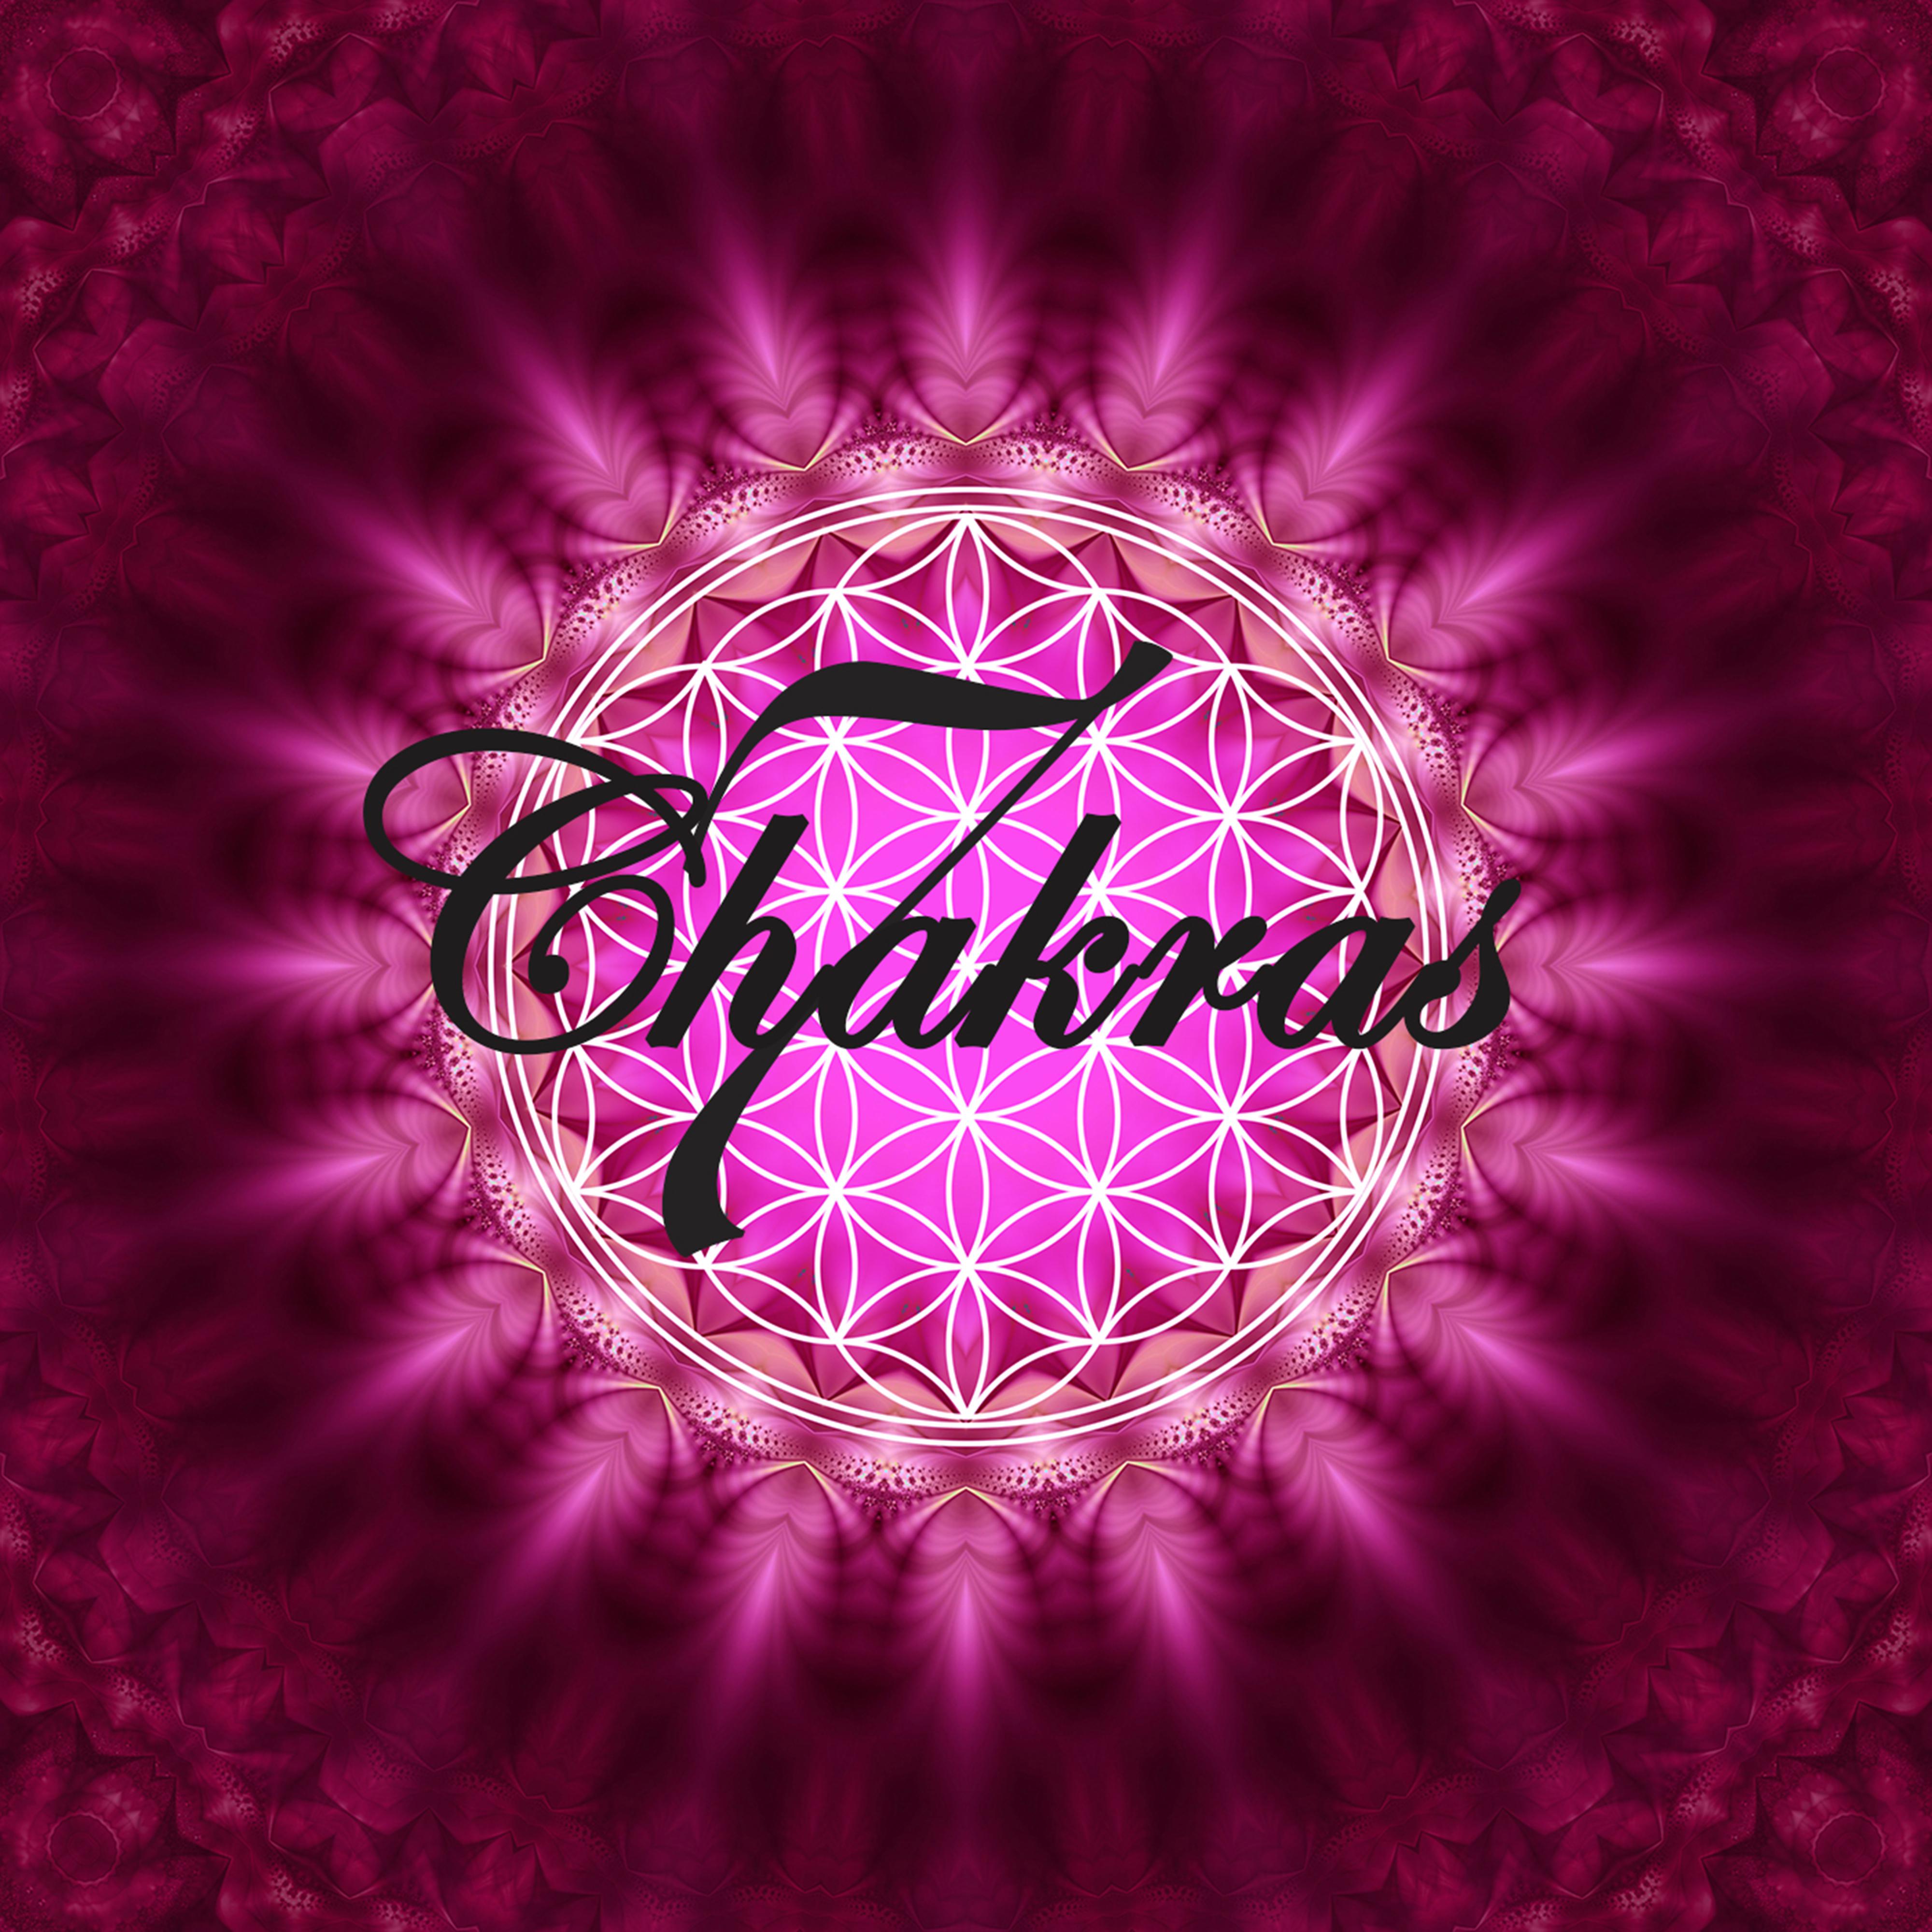 Seven Chakras (Meditation)